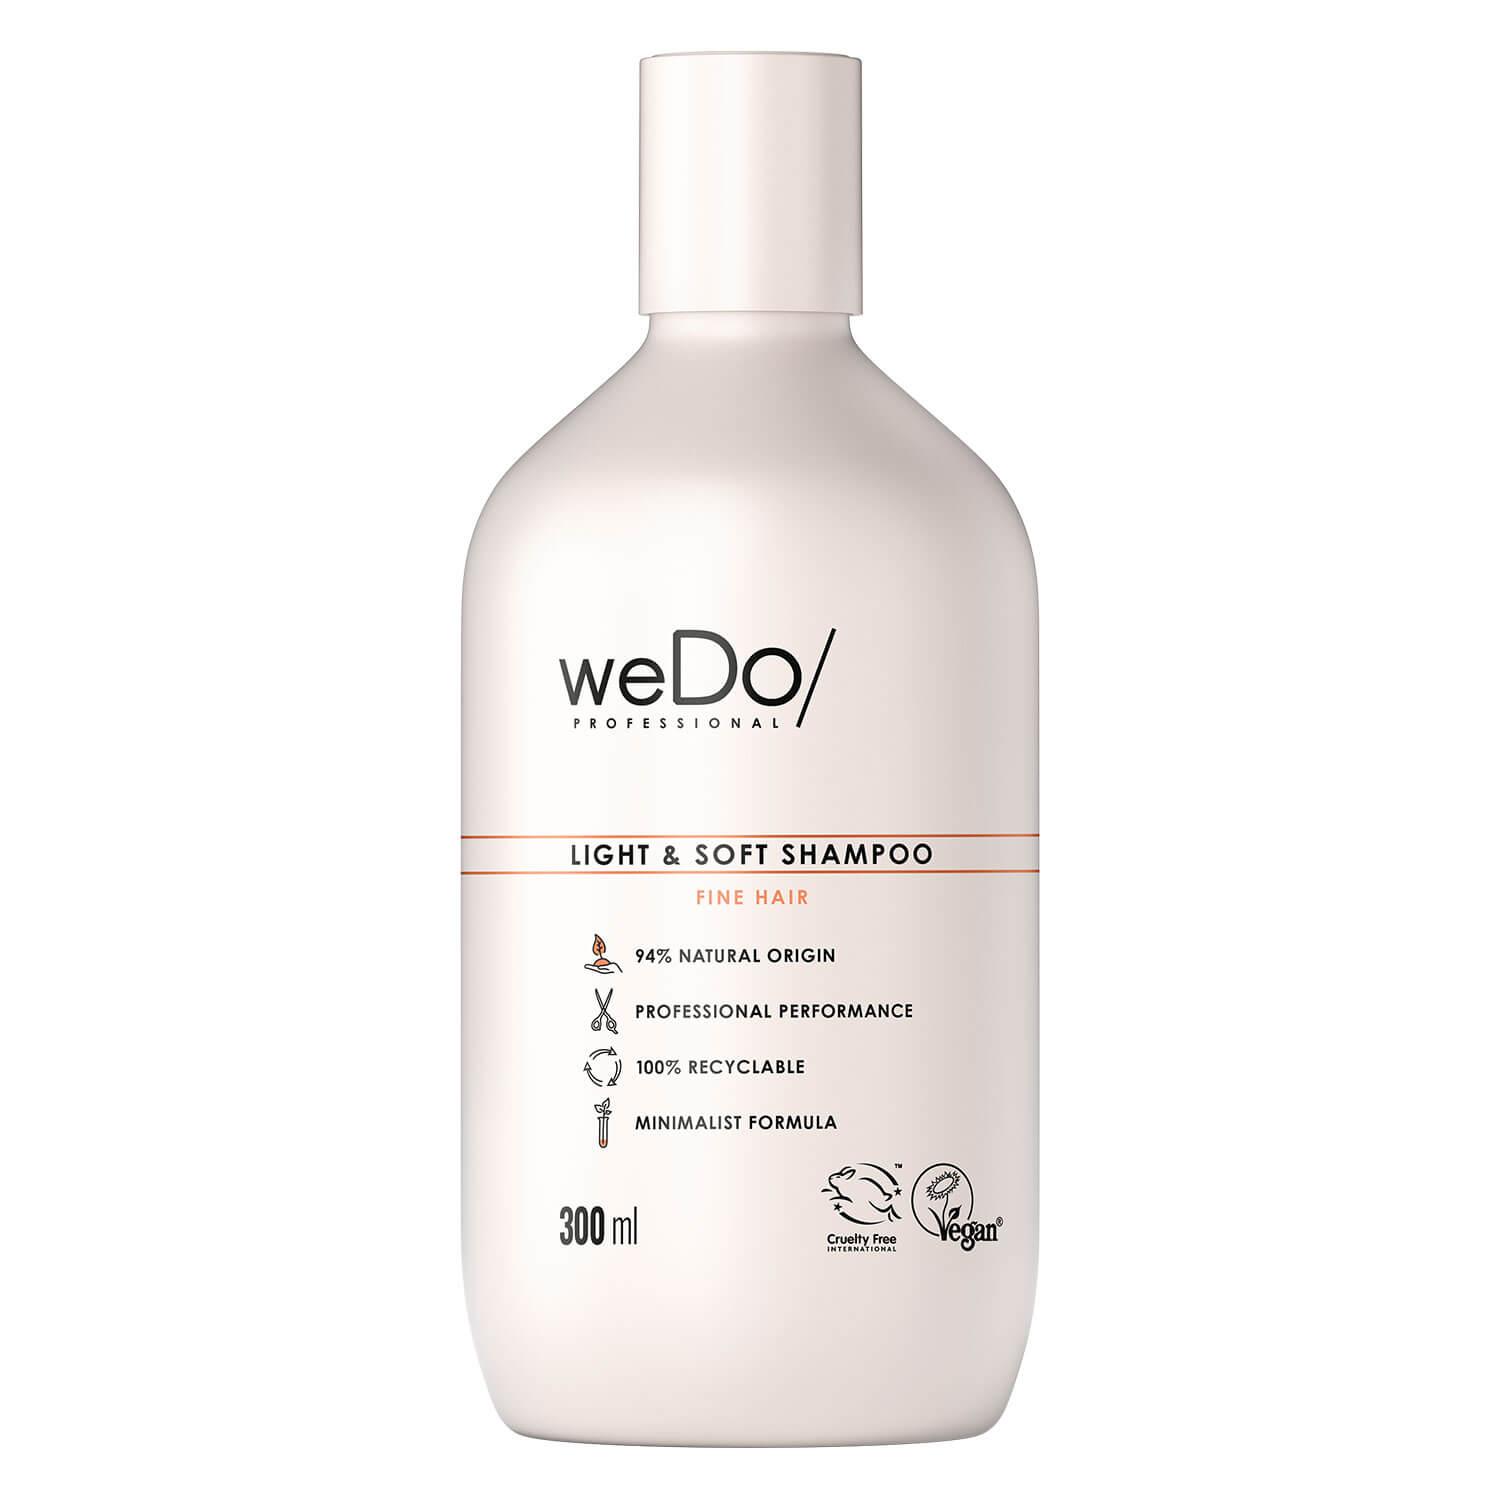 weDo/ - Light & Soft Shampoo